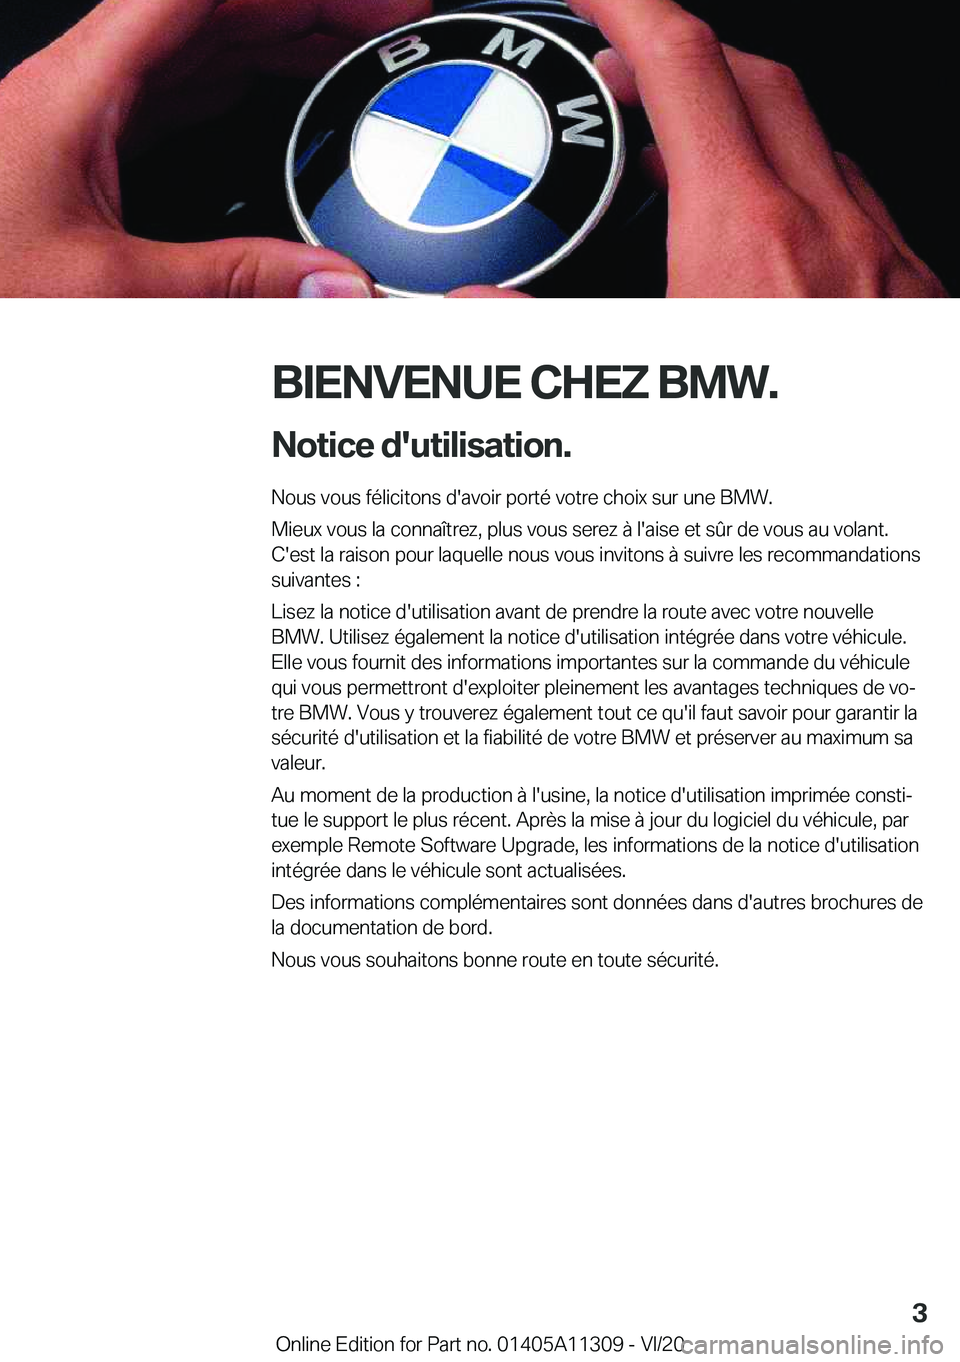 BMW 5 SERIES 2021  Notices Demploi (in French) �B�I�E�N�V�E�N�U�E��C�H�E�Z��B�M�W�.�N�o�t�i�c�e��d�'�u�t�i�l�i�s�a�t�i�o�n�.
�N�o�u�s��v�o�u�s��f�é�l�i�c�i�t�o�n�s��d�'�a�v�o�i�r��p�o�r�t�é��v�o�t�r�e��c�h�o�i�x��s�u�r��u�n�e�